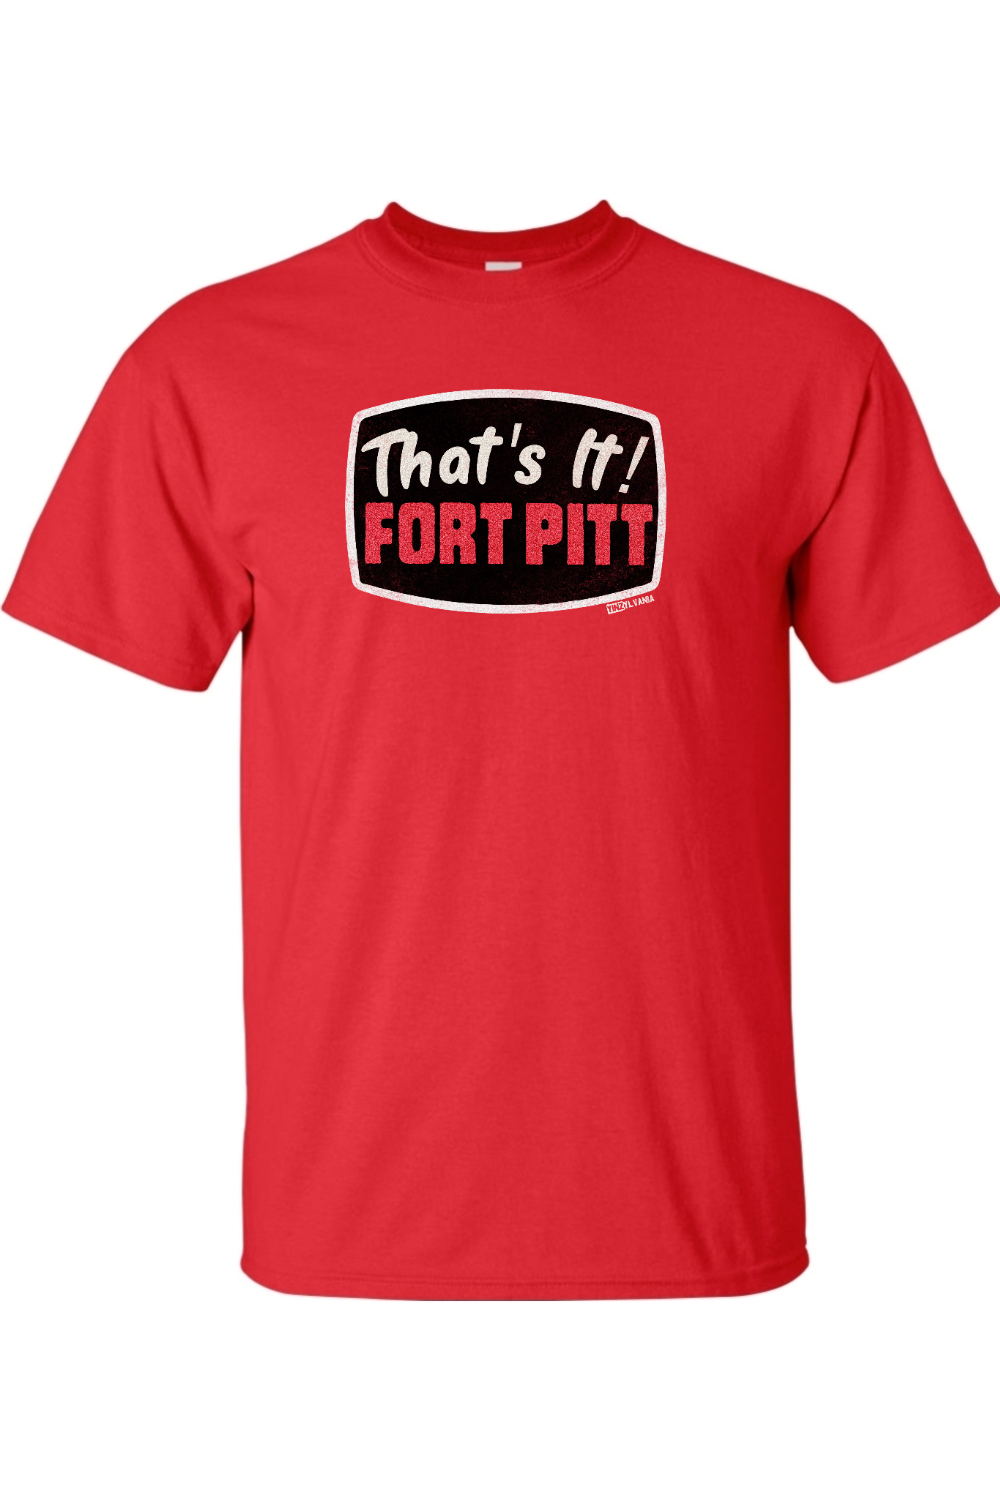 That's It Fort Pitt - Gildan Heavy Cotton T-Shirt - Yinzylvania